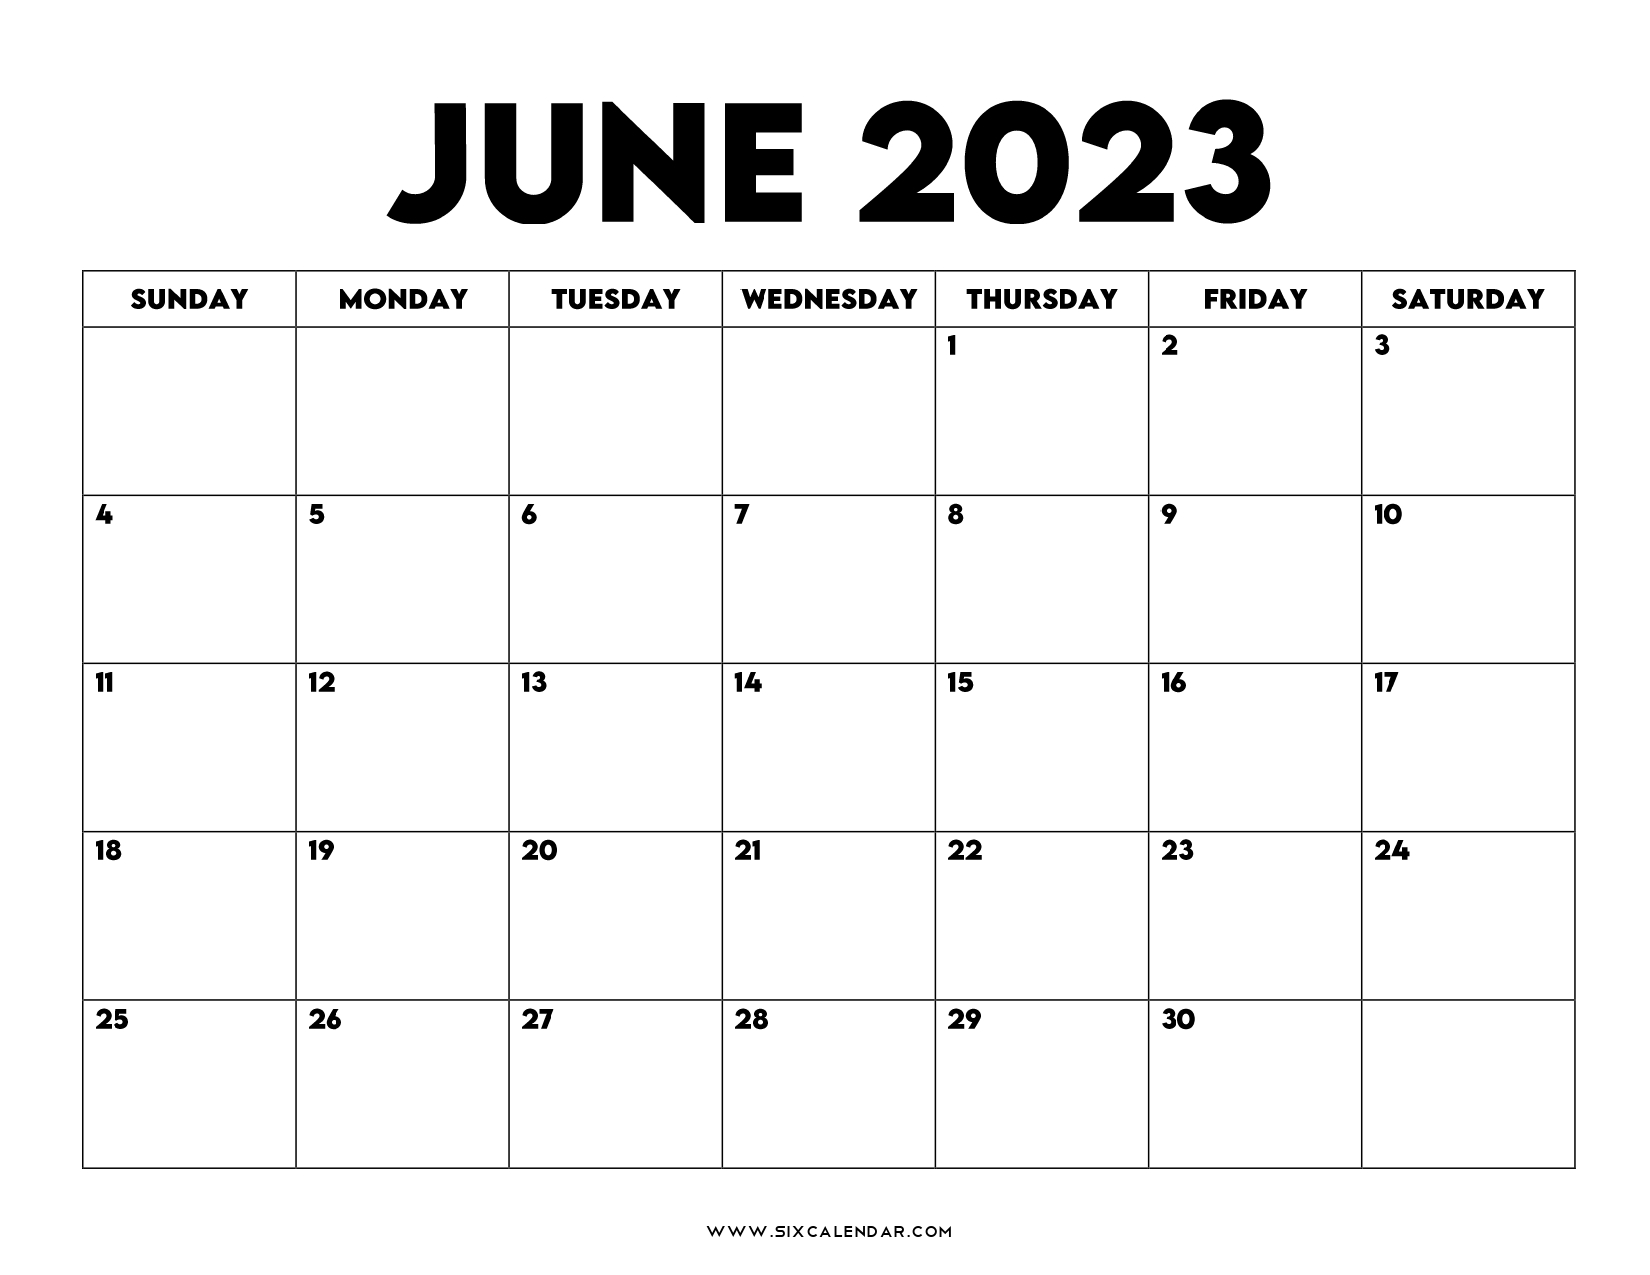 June 2023 Calendar PDF, June Calendar Printable with Holidays